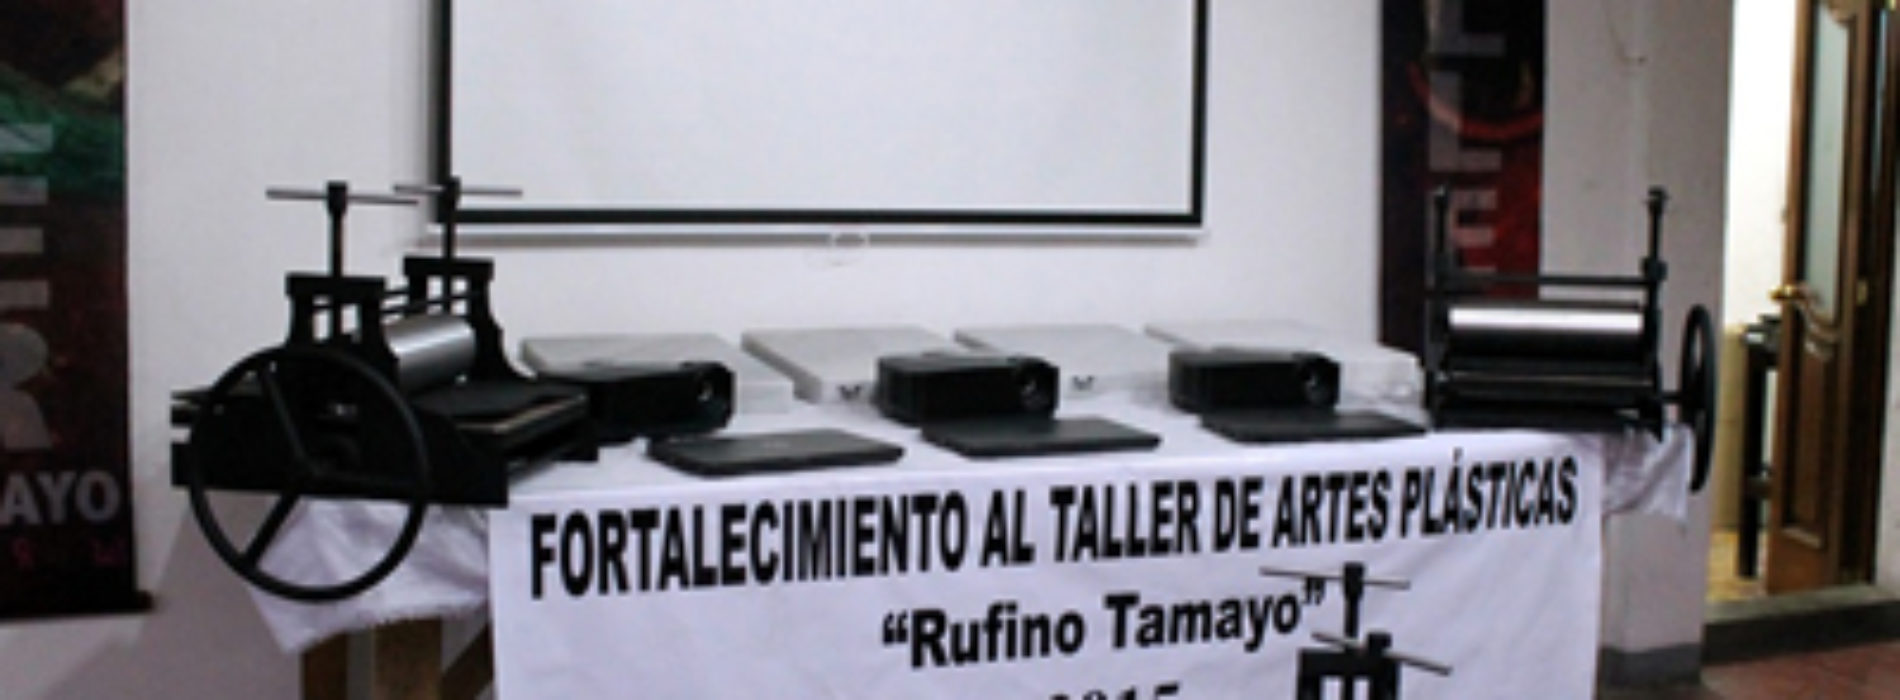 Entrega SECULTA equipo al Taller Rufino Tamayo